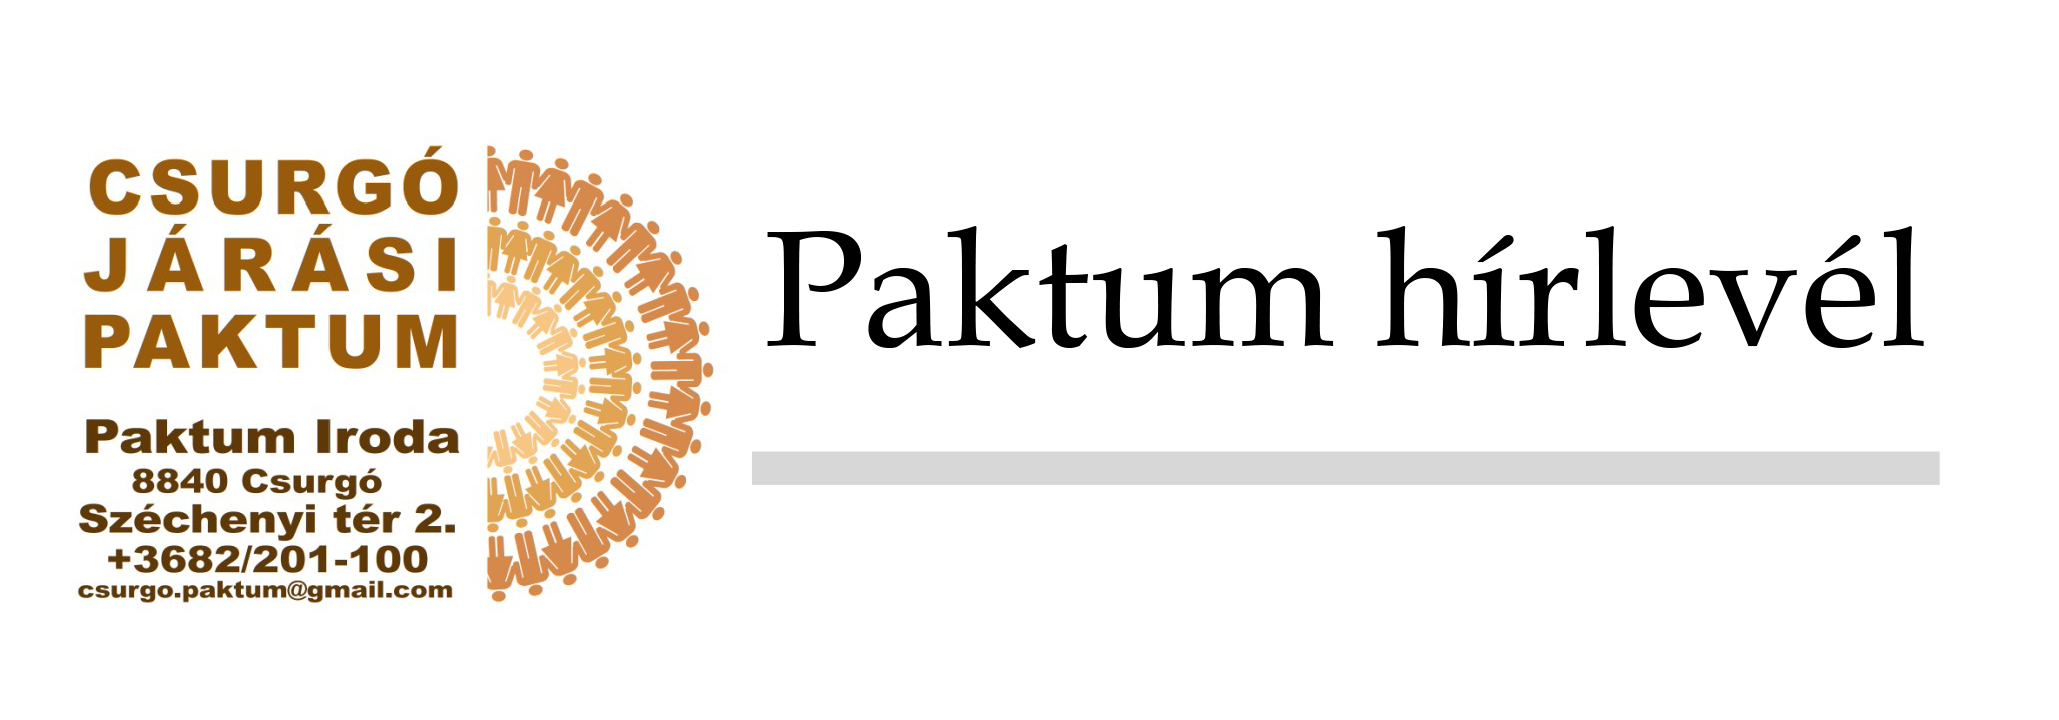 patum hirlevel logo